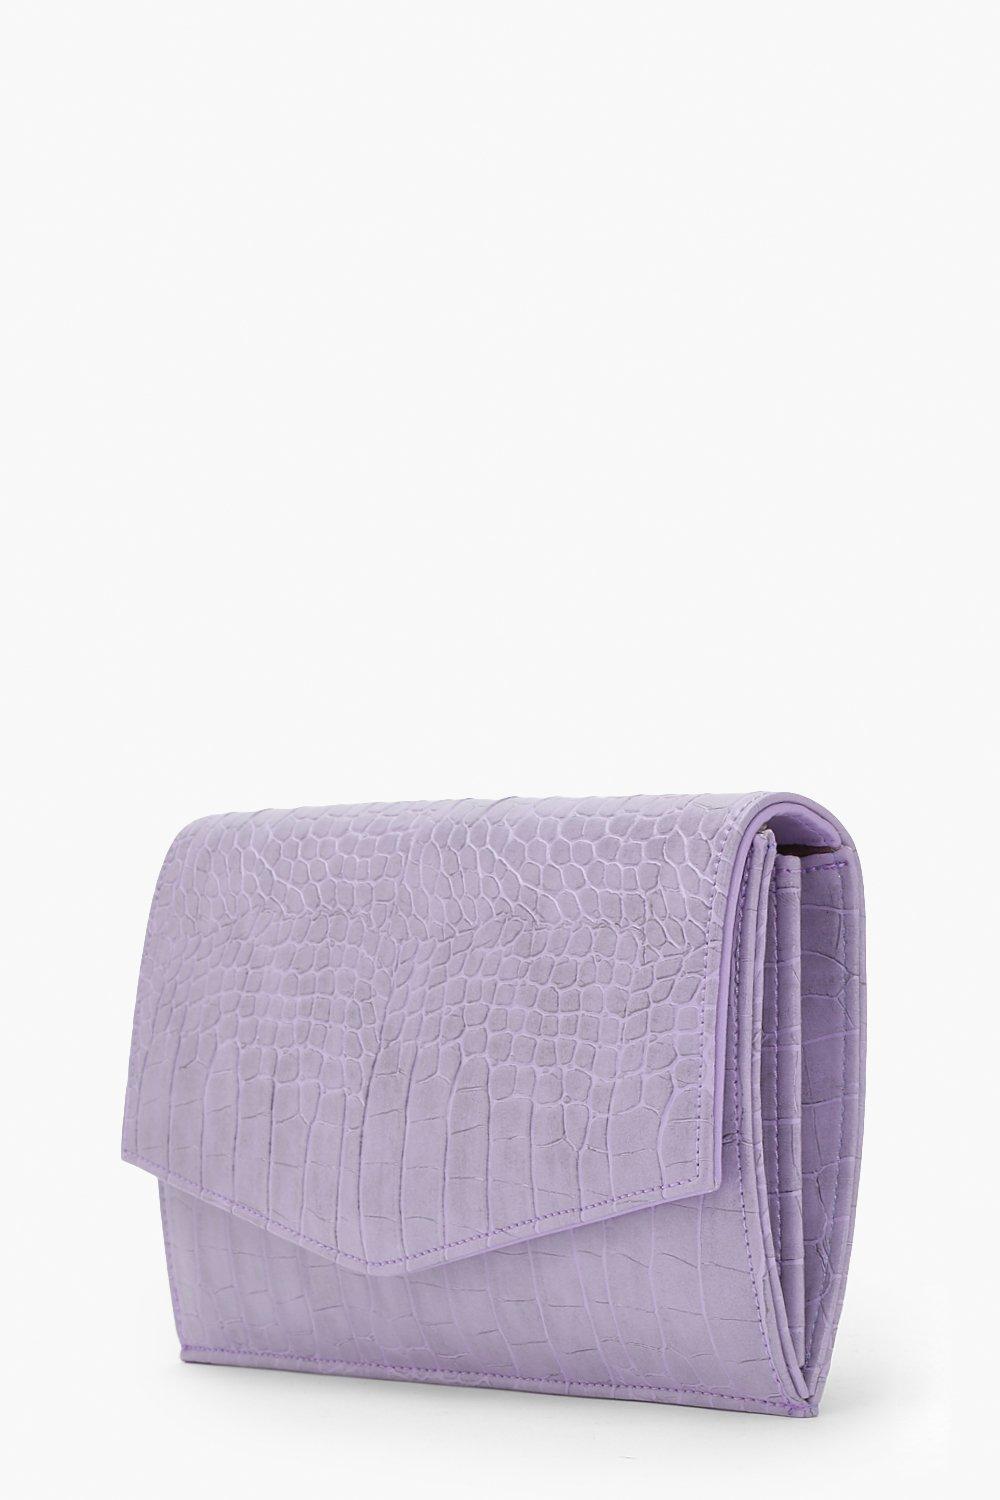 womens croc envelope mini clutch - purple - one size, purple